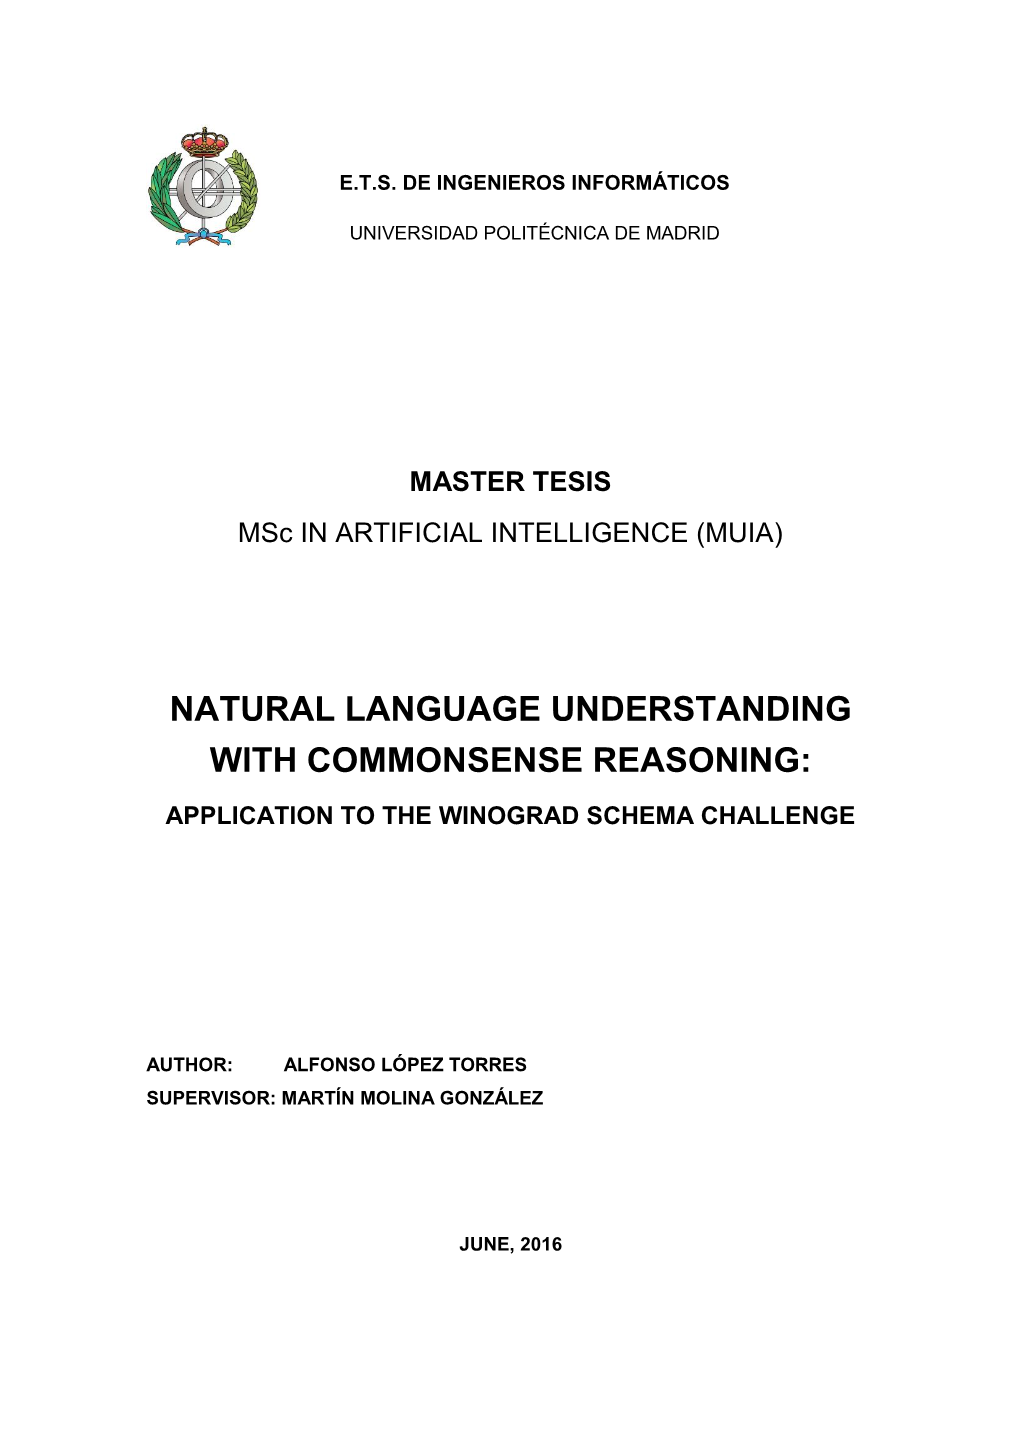 Natural Language Understanding with Commonsense Reasoning